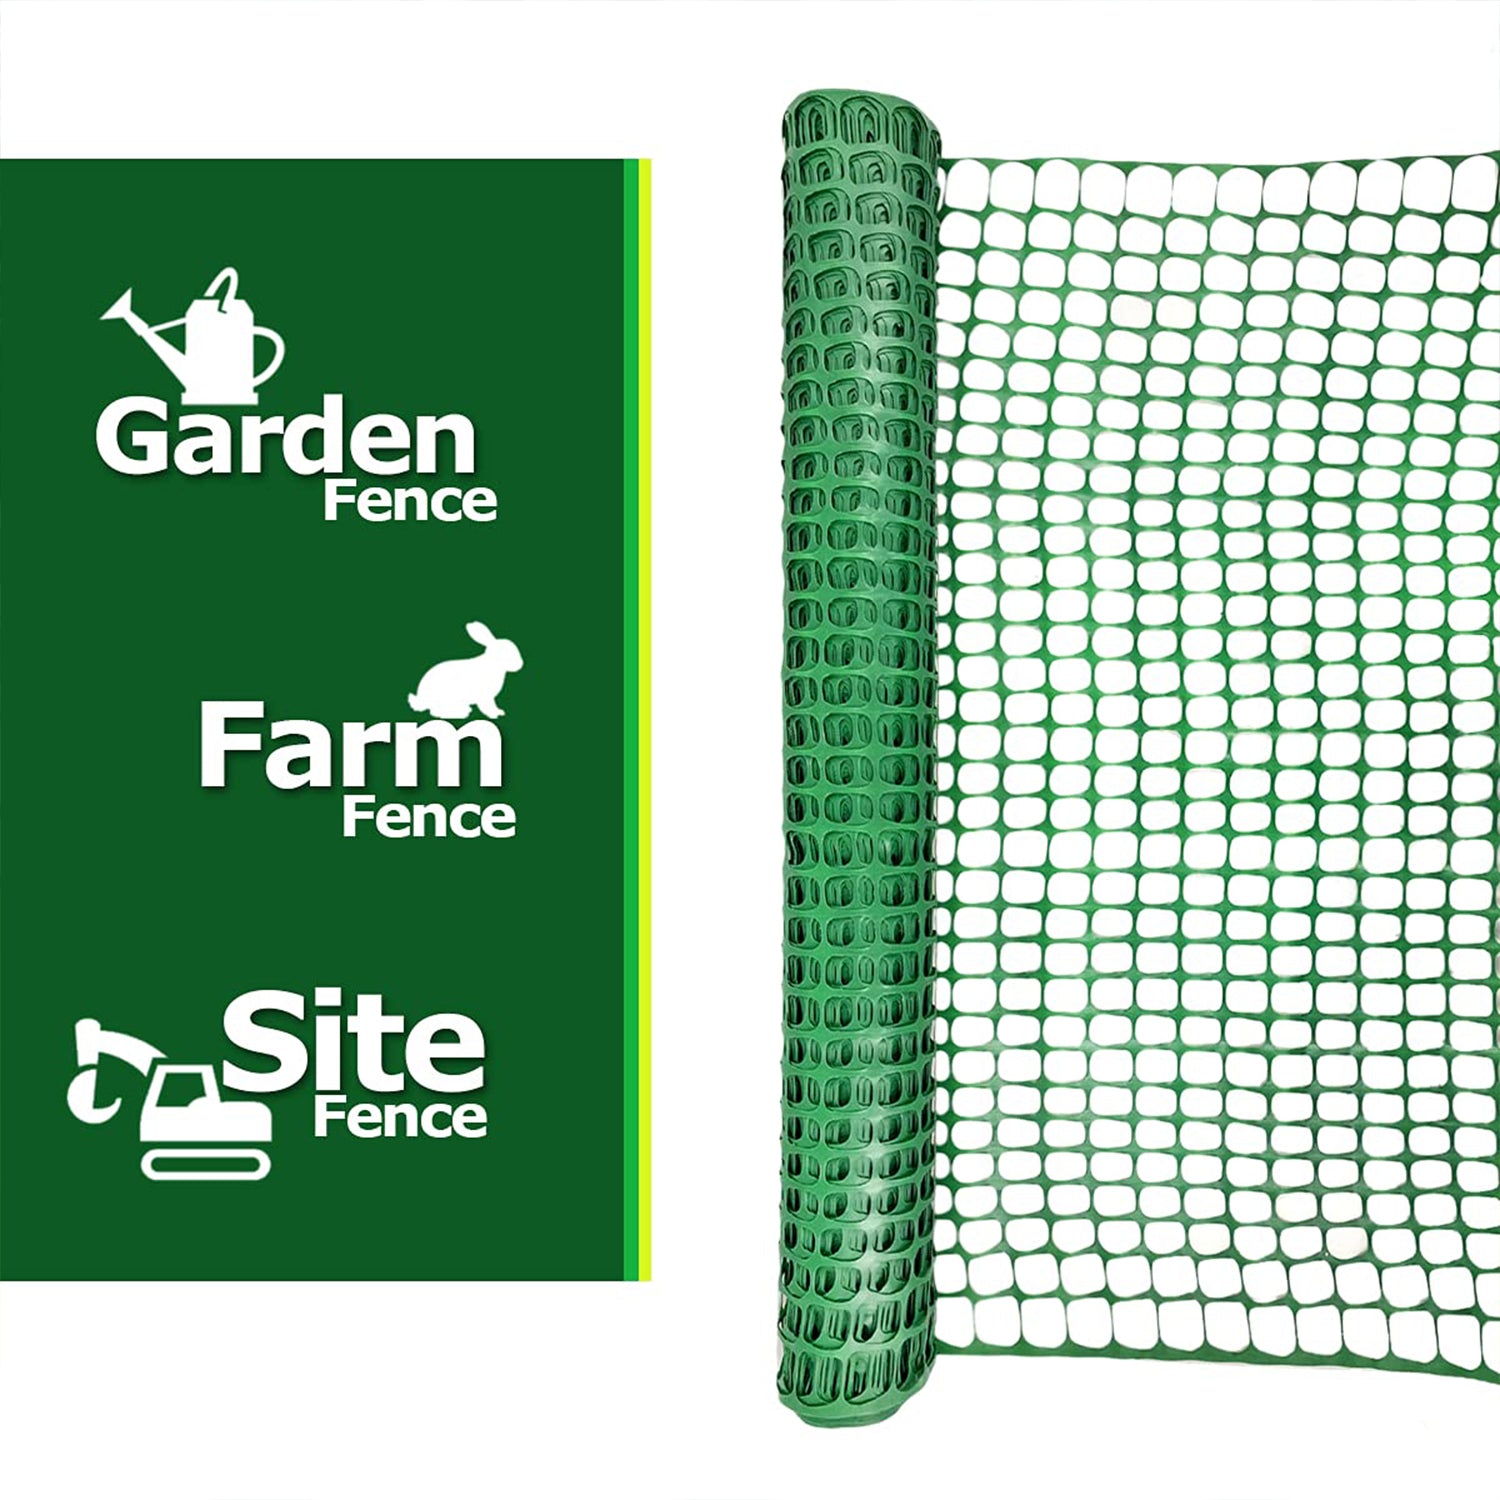 Ashman 200 ft. x 4 ft. Plastic Mesh Fence, Construction Barrier Netting, Garden Fencing, Fences Wrap, Green, 1 Roll